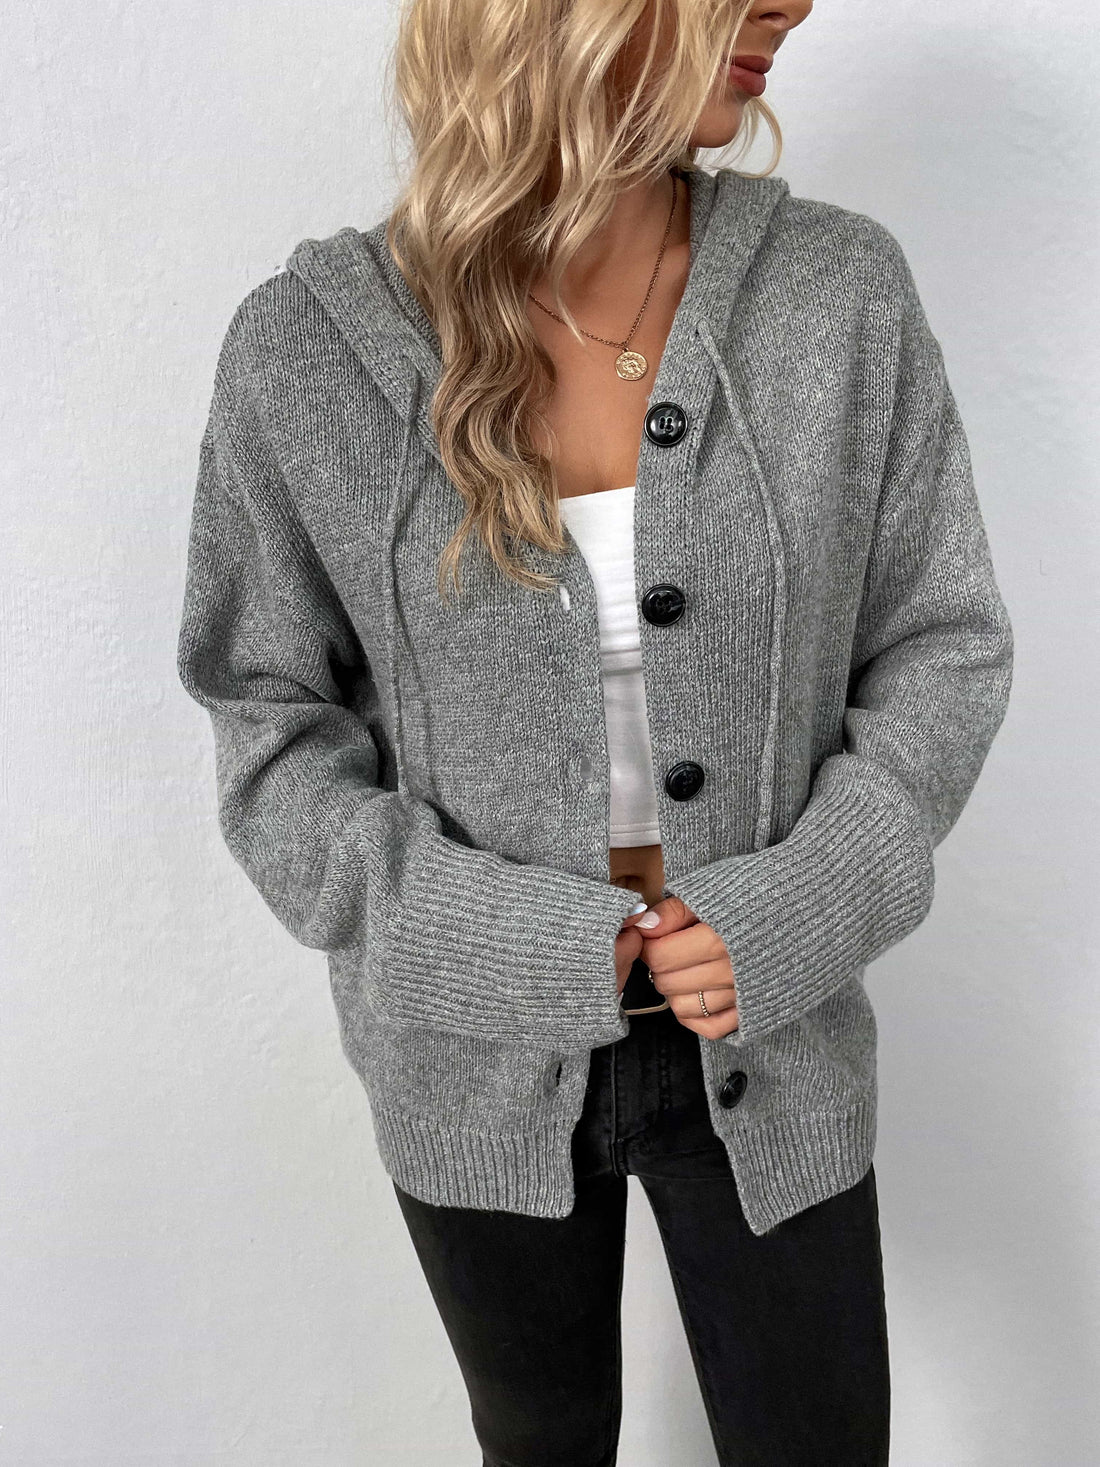  Women's Fall/Winter Jackets & Coats